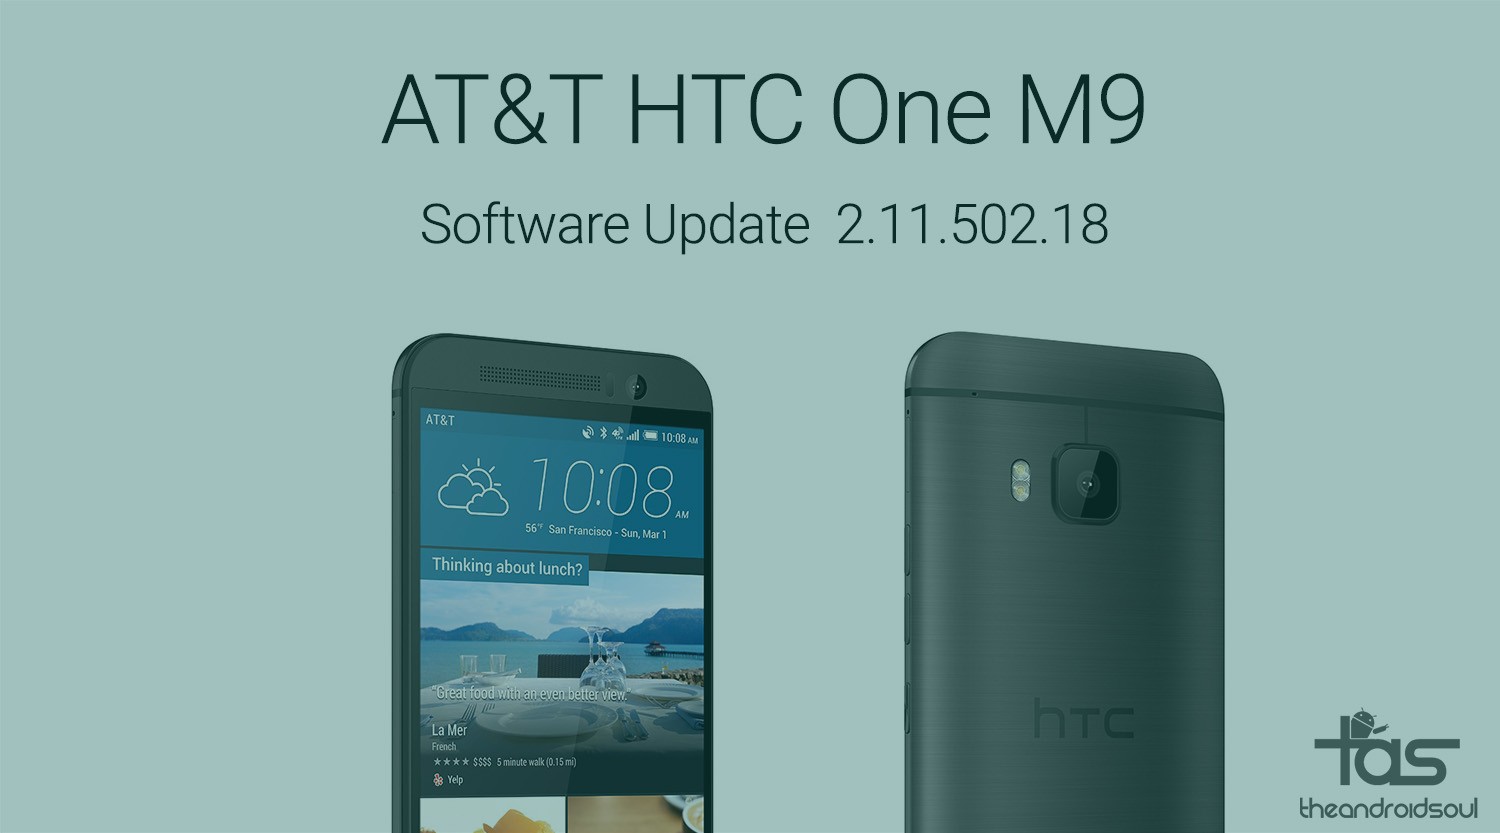 AT&T HTC One M9 recibe actualización de software (versión 2.11.502.18), trae parches para boletines de Google